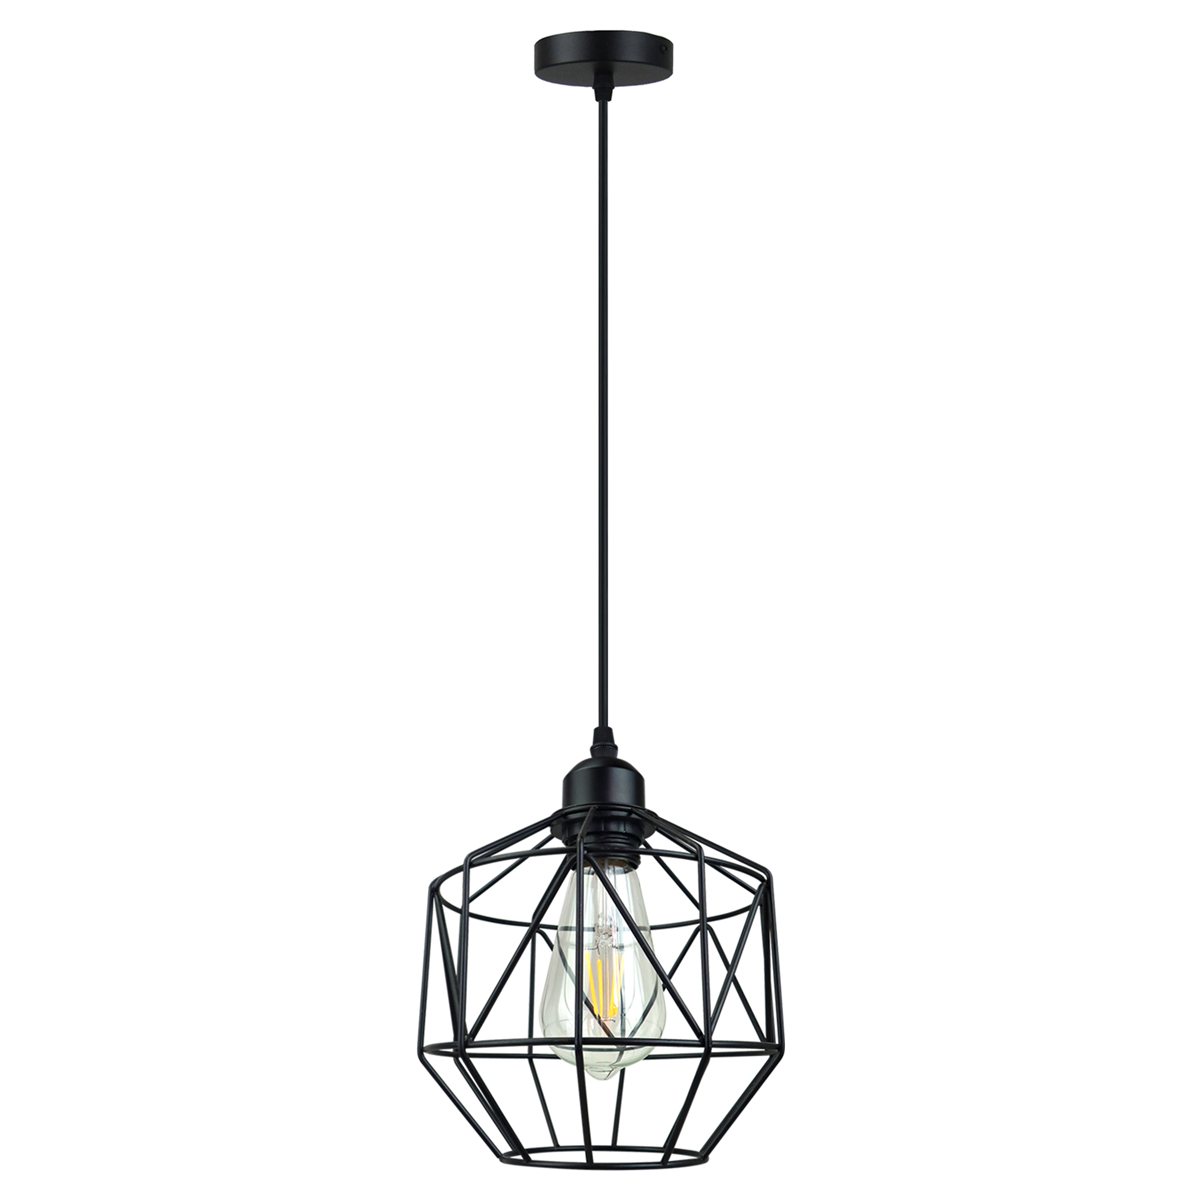 Modern-Home-Metal-Pendant-Lamp-Industrial-Hanging-Light-Fixture-Ceiling-Lamp-1841326-6